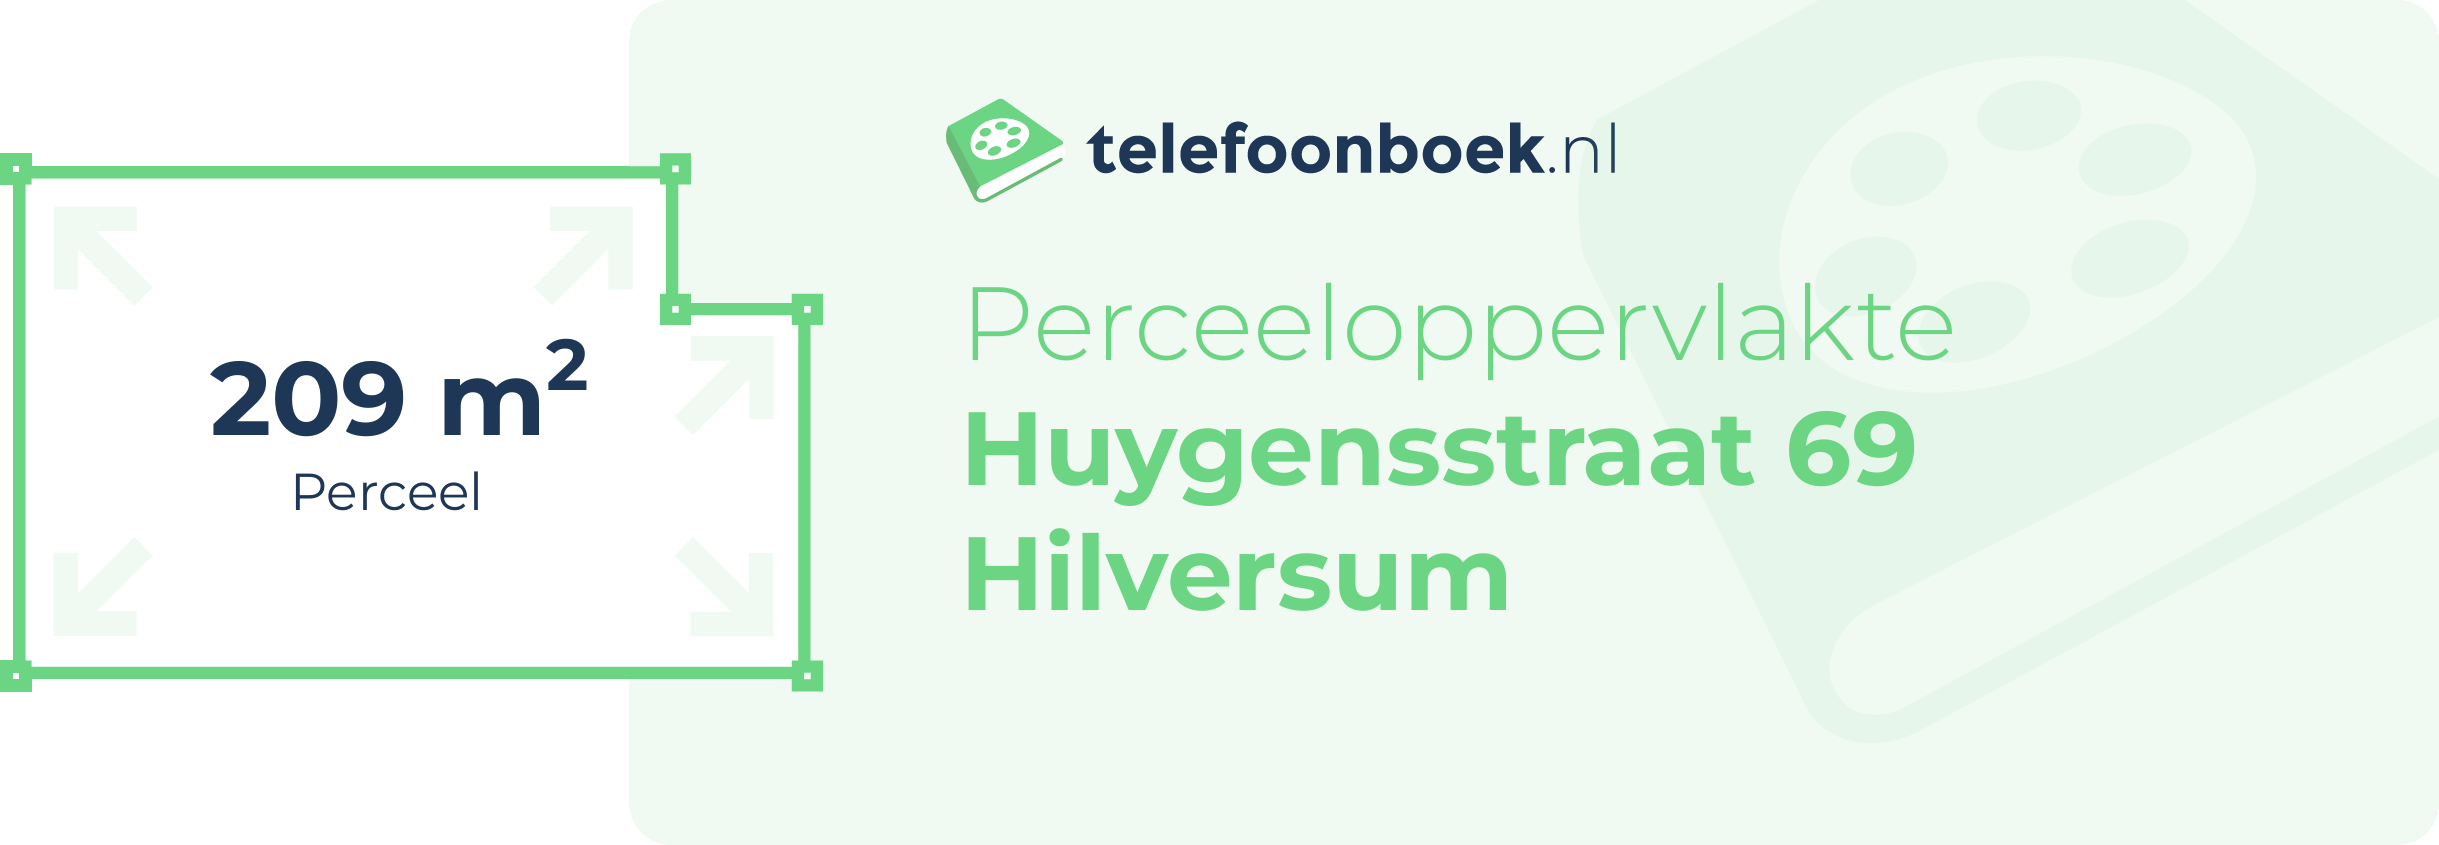 Perceeloppervlakte Huygensstraat 69 Hilversum